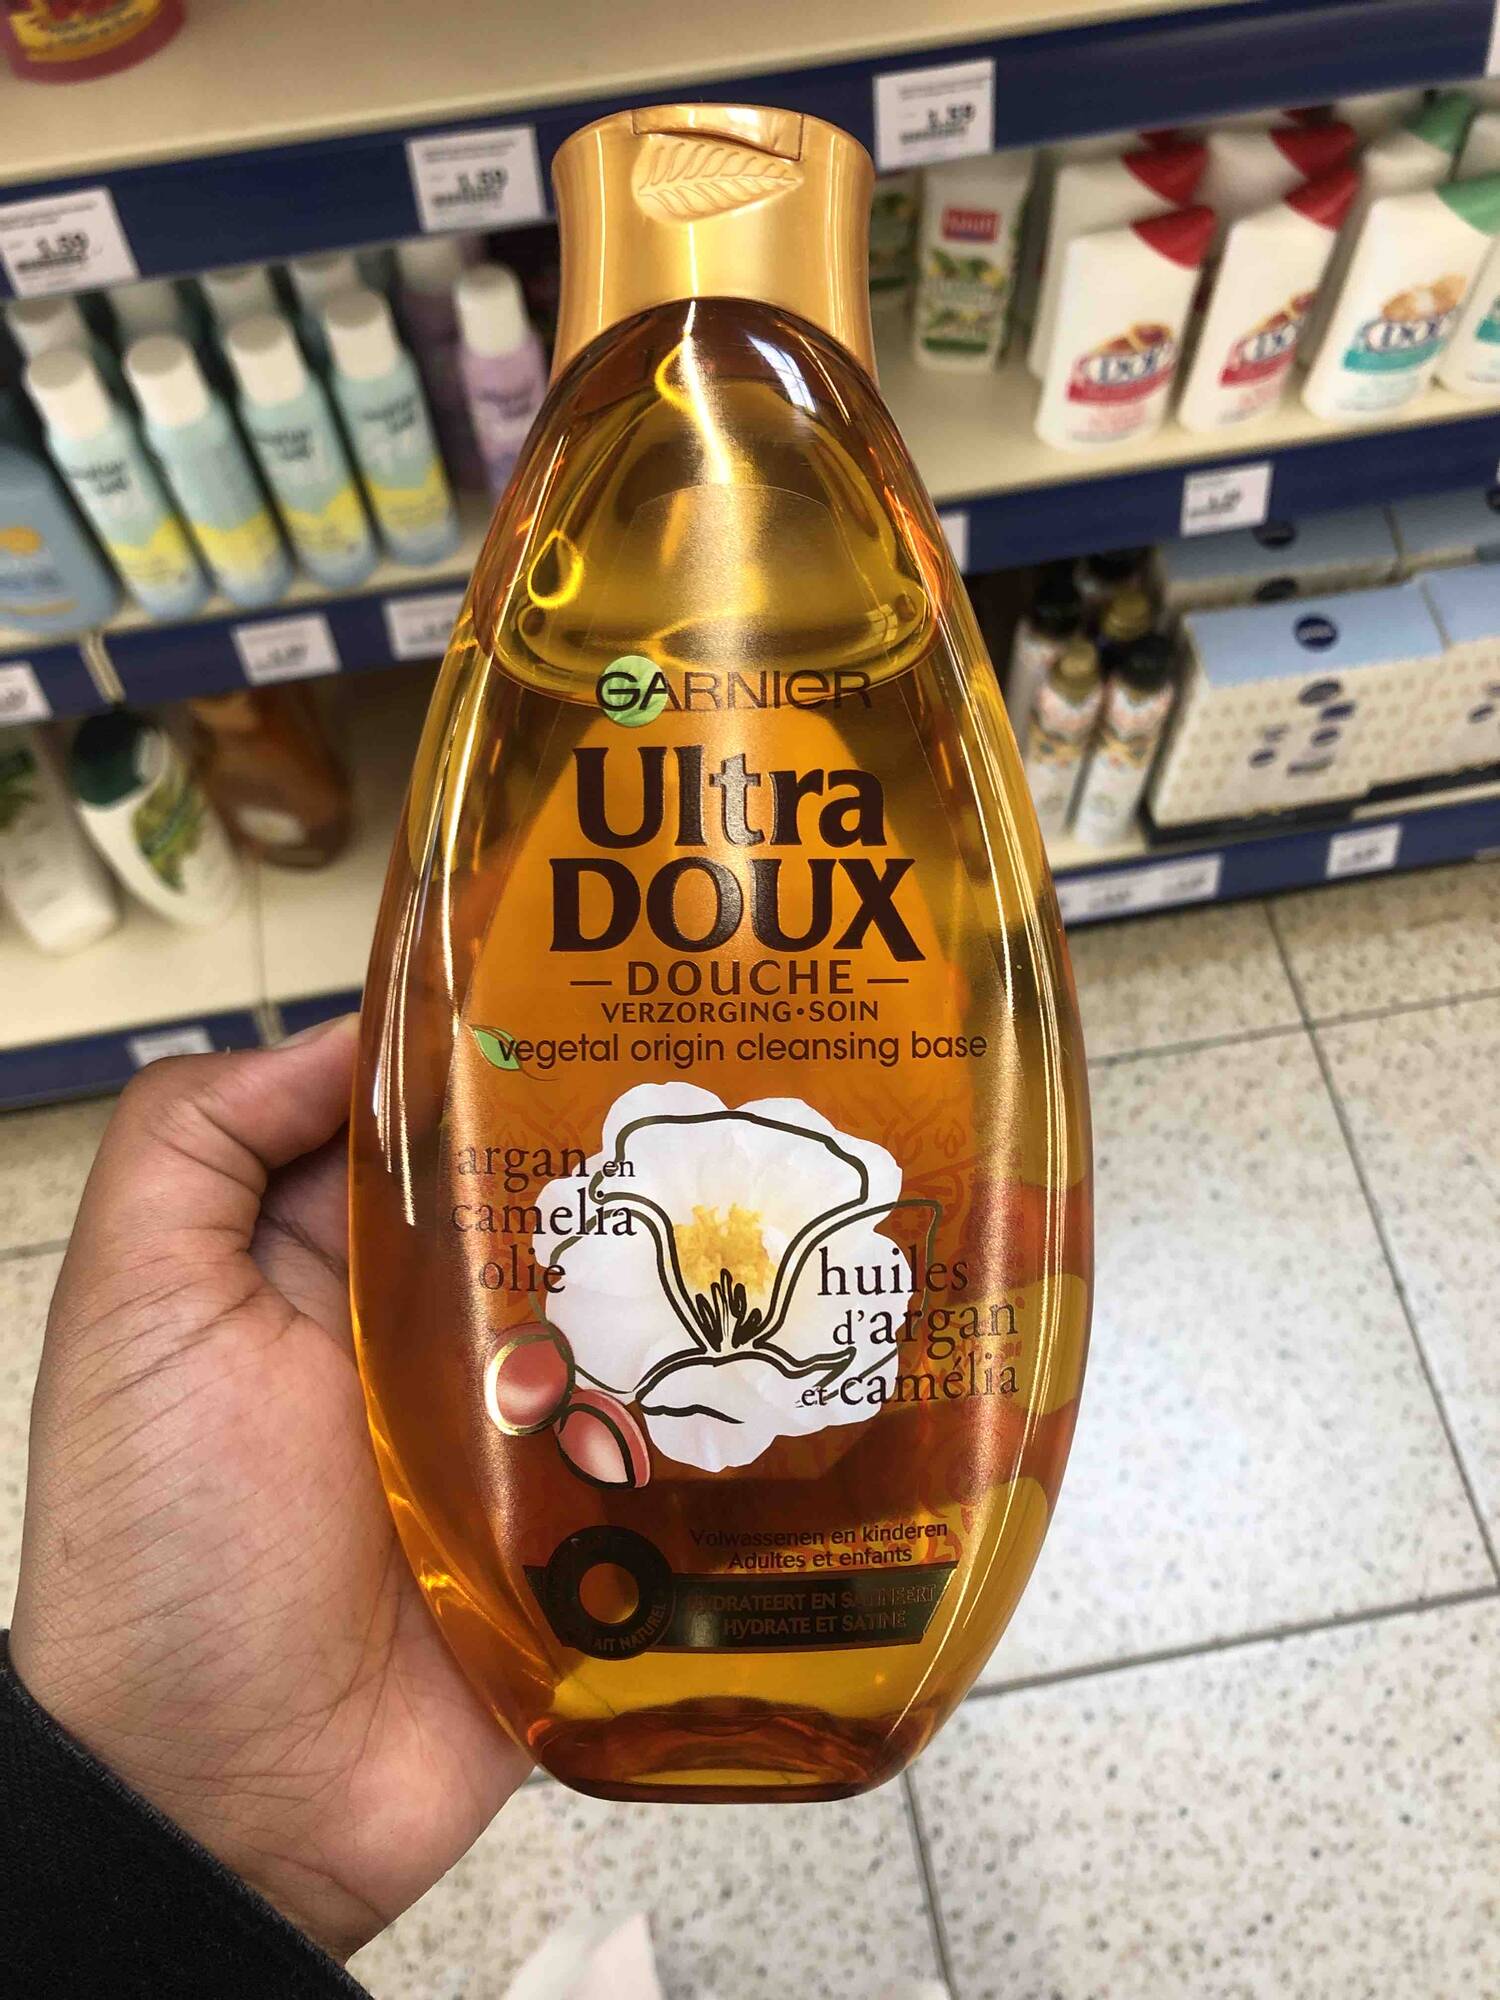 GARNIER - Ultra doux huile d'argan et camélia - Douche 